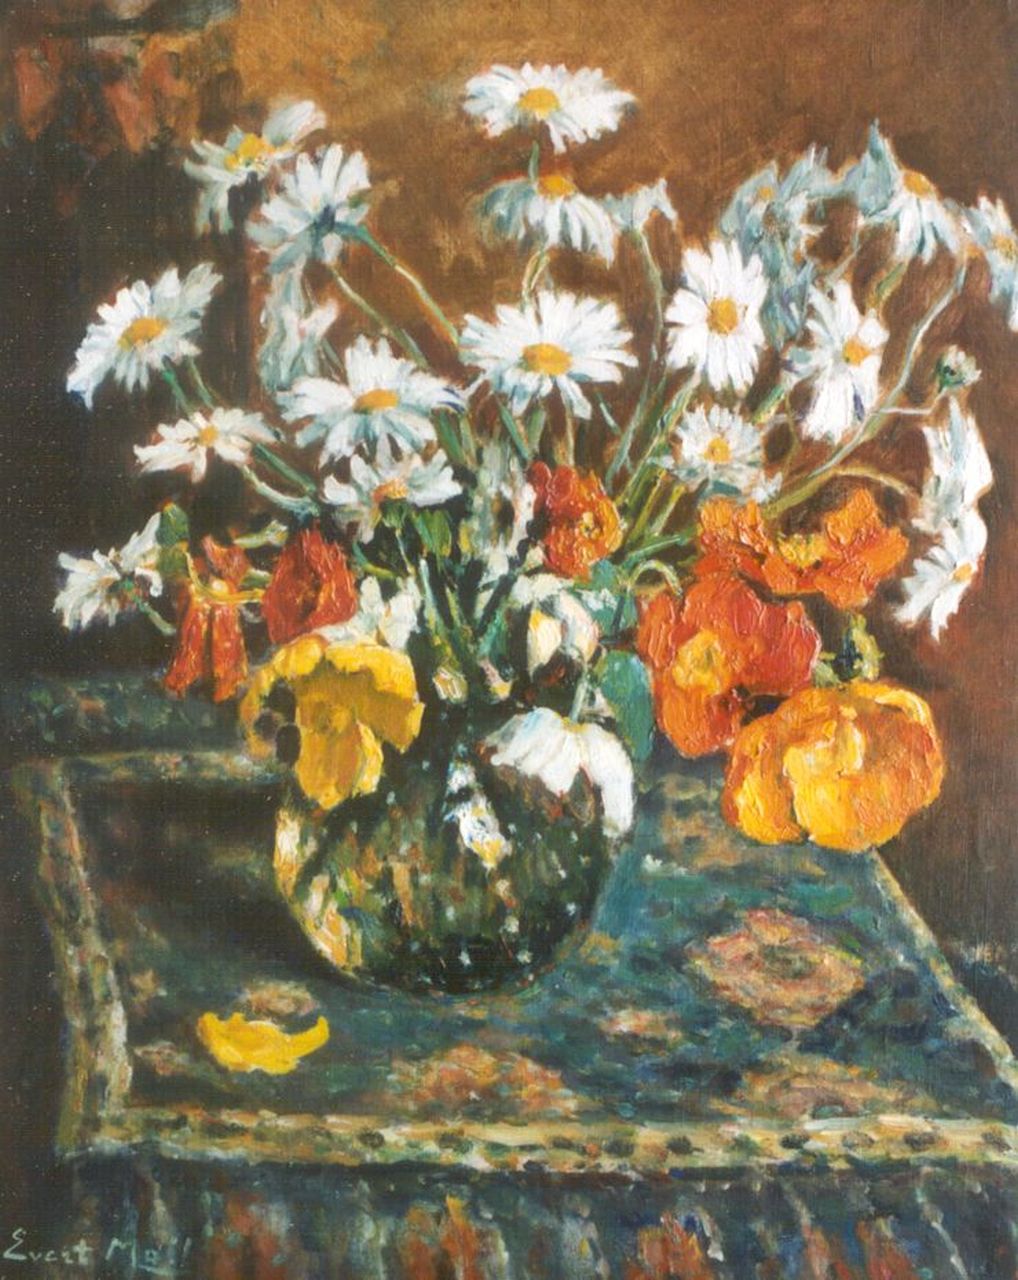 Moll E.  | Evert Moll, Margrieten en tulpen, olieverf op doek 70,0 x 59,8 cm, gesigneerd linksonder